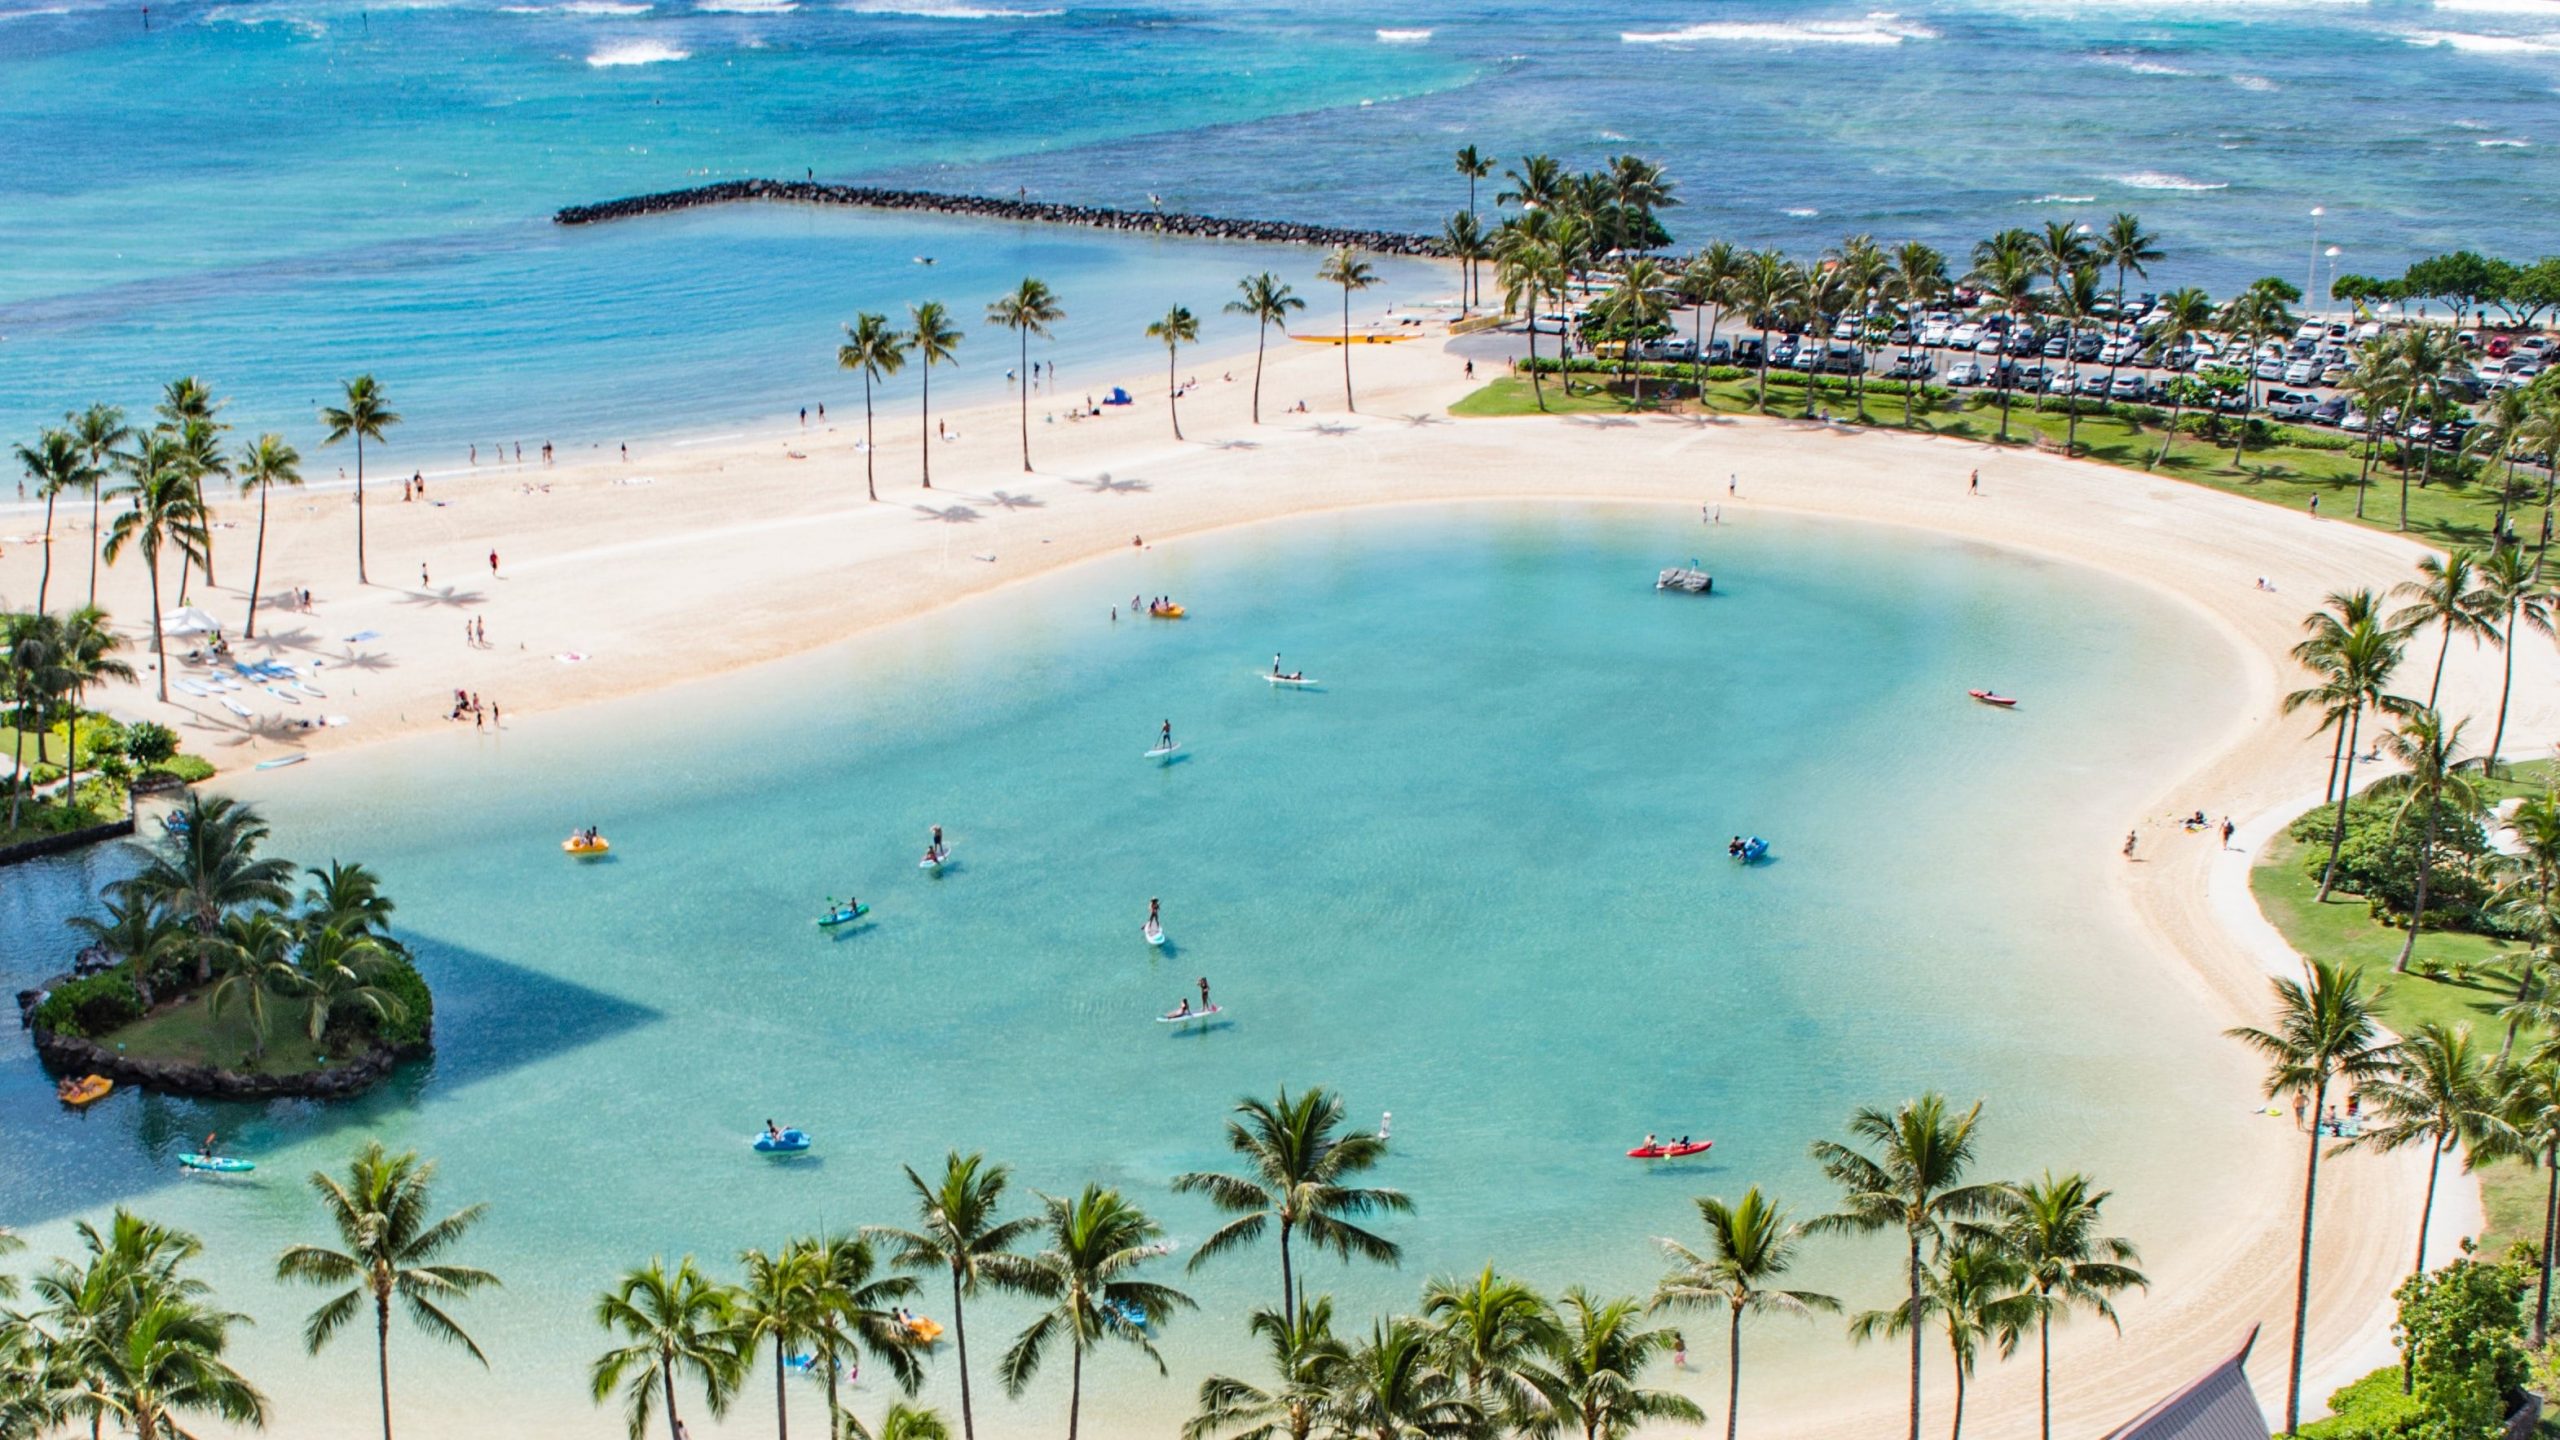 Misspelling of ‘Moderna’ gets tourist arrested in Hawaii